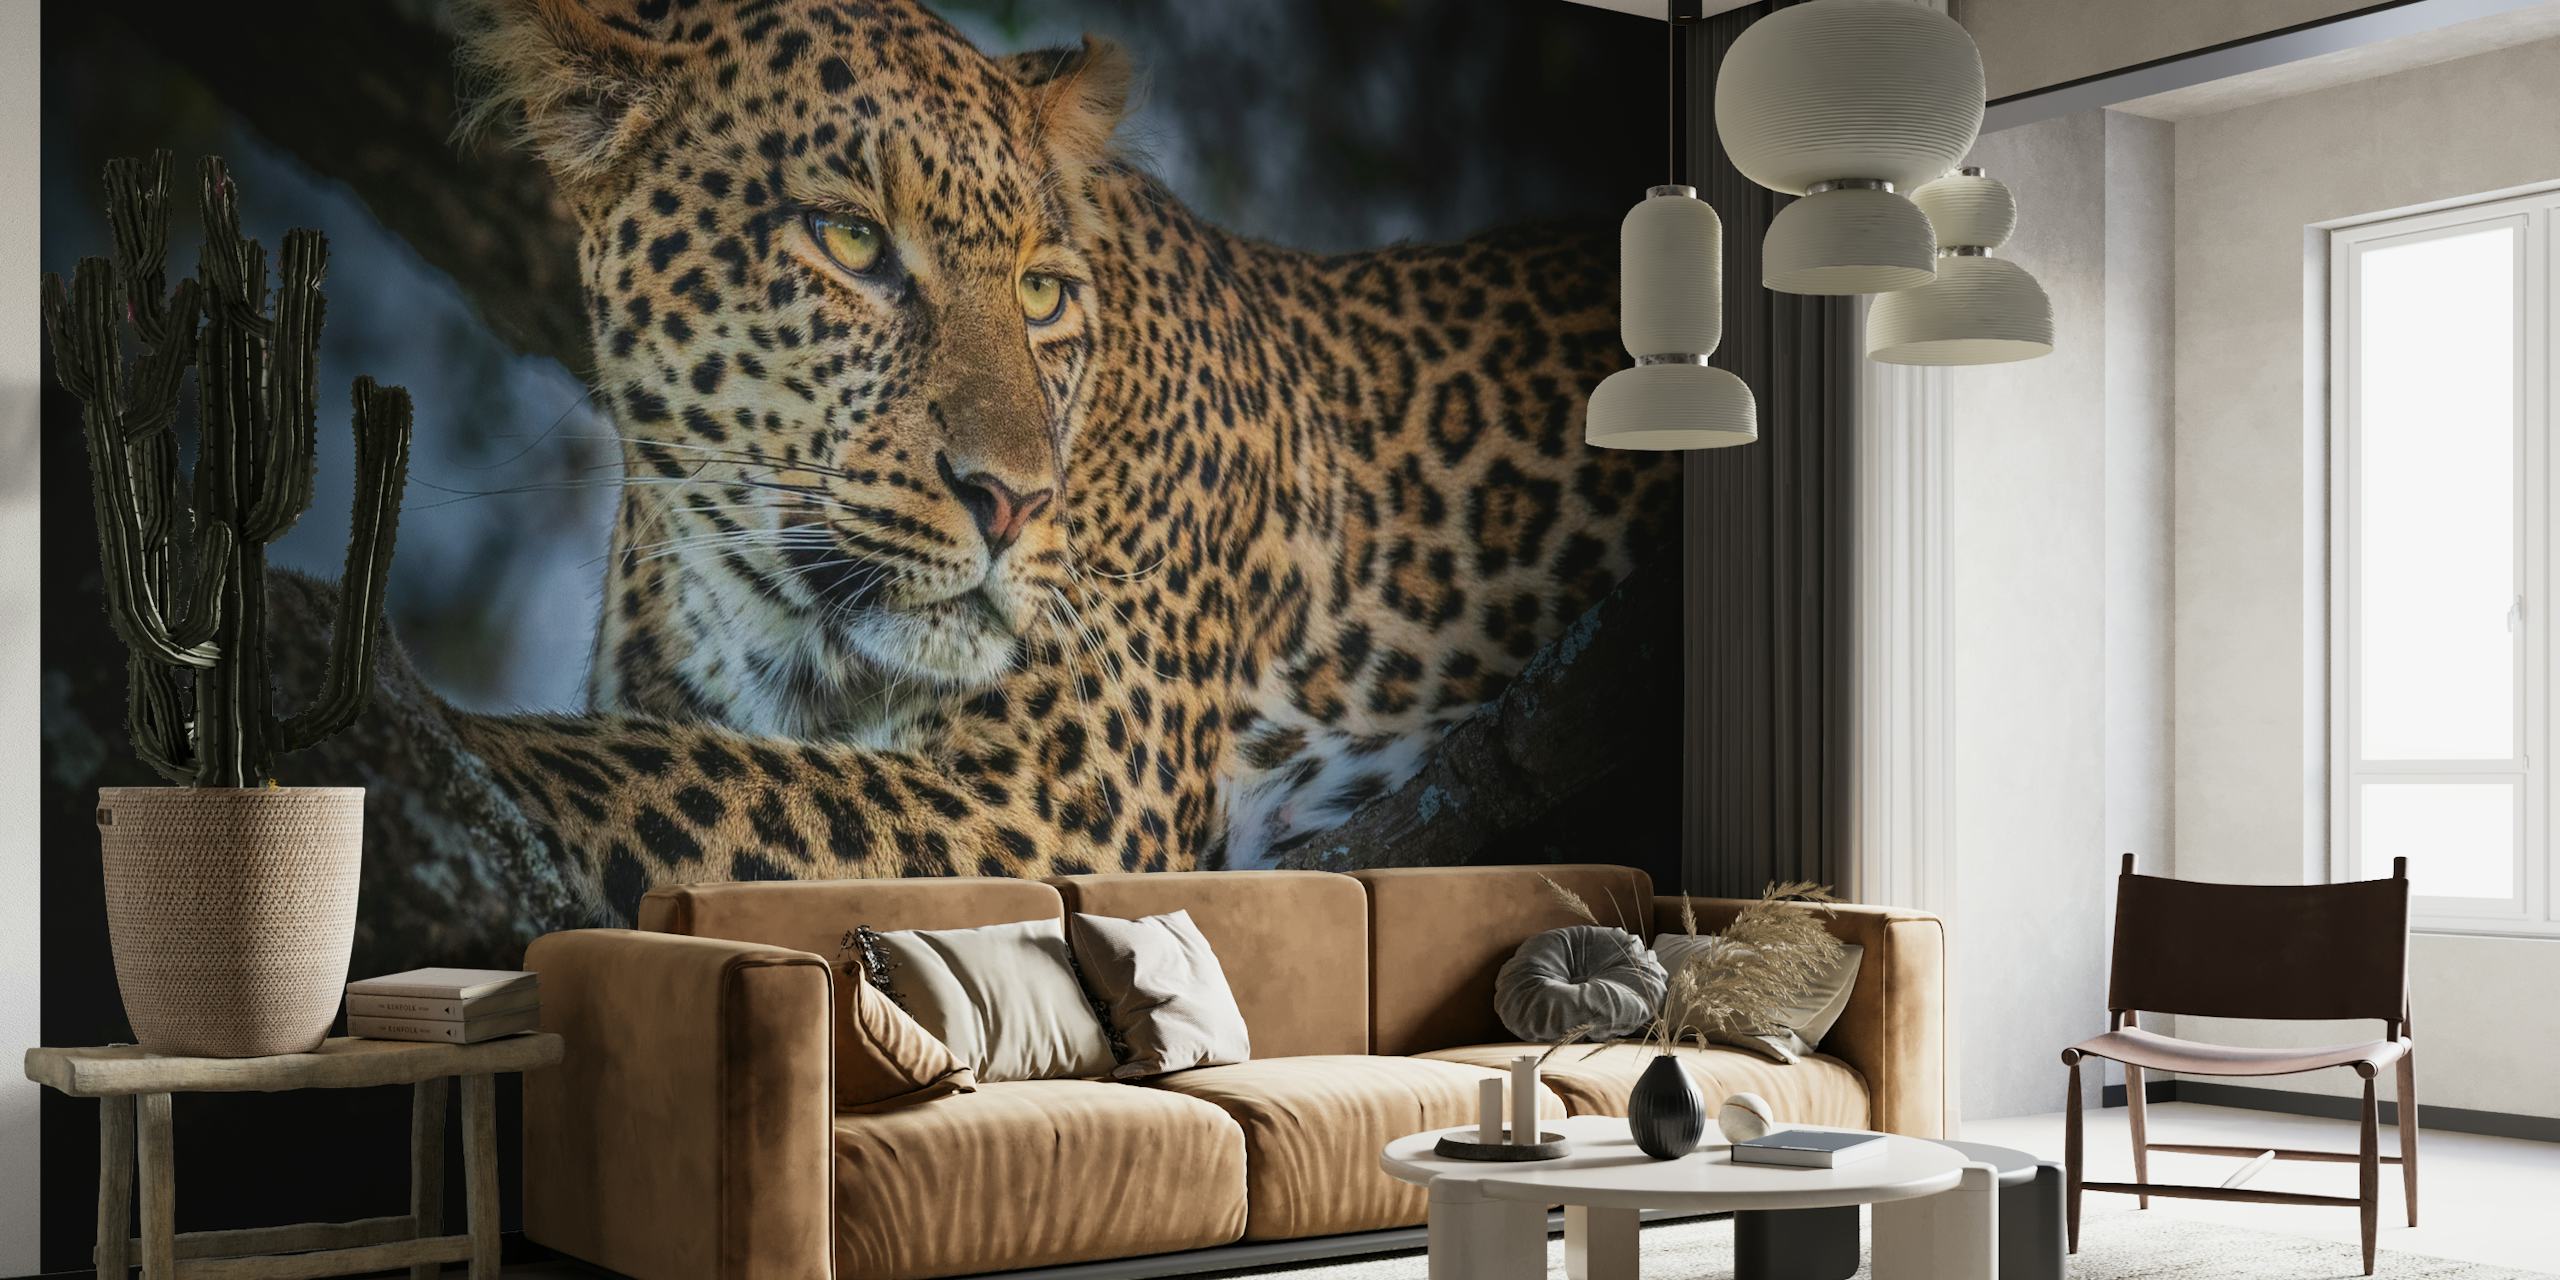 The Leopard wallpaper